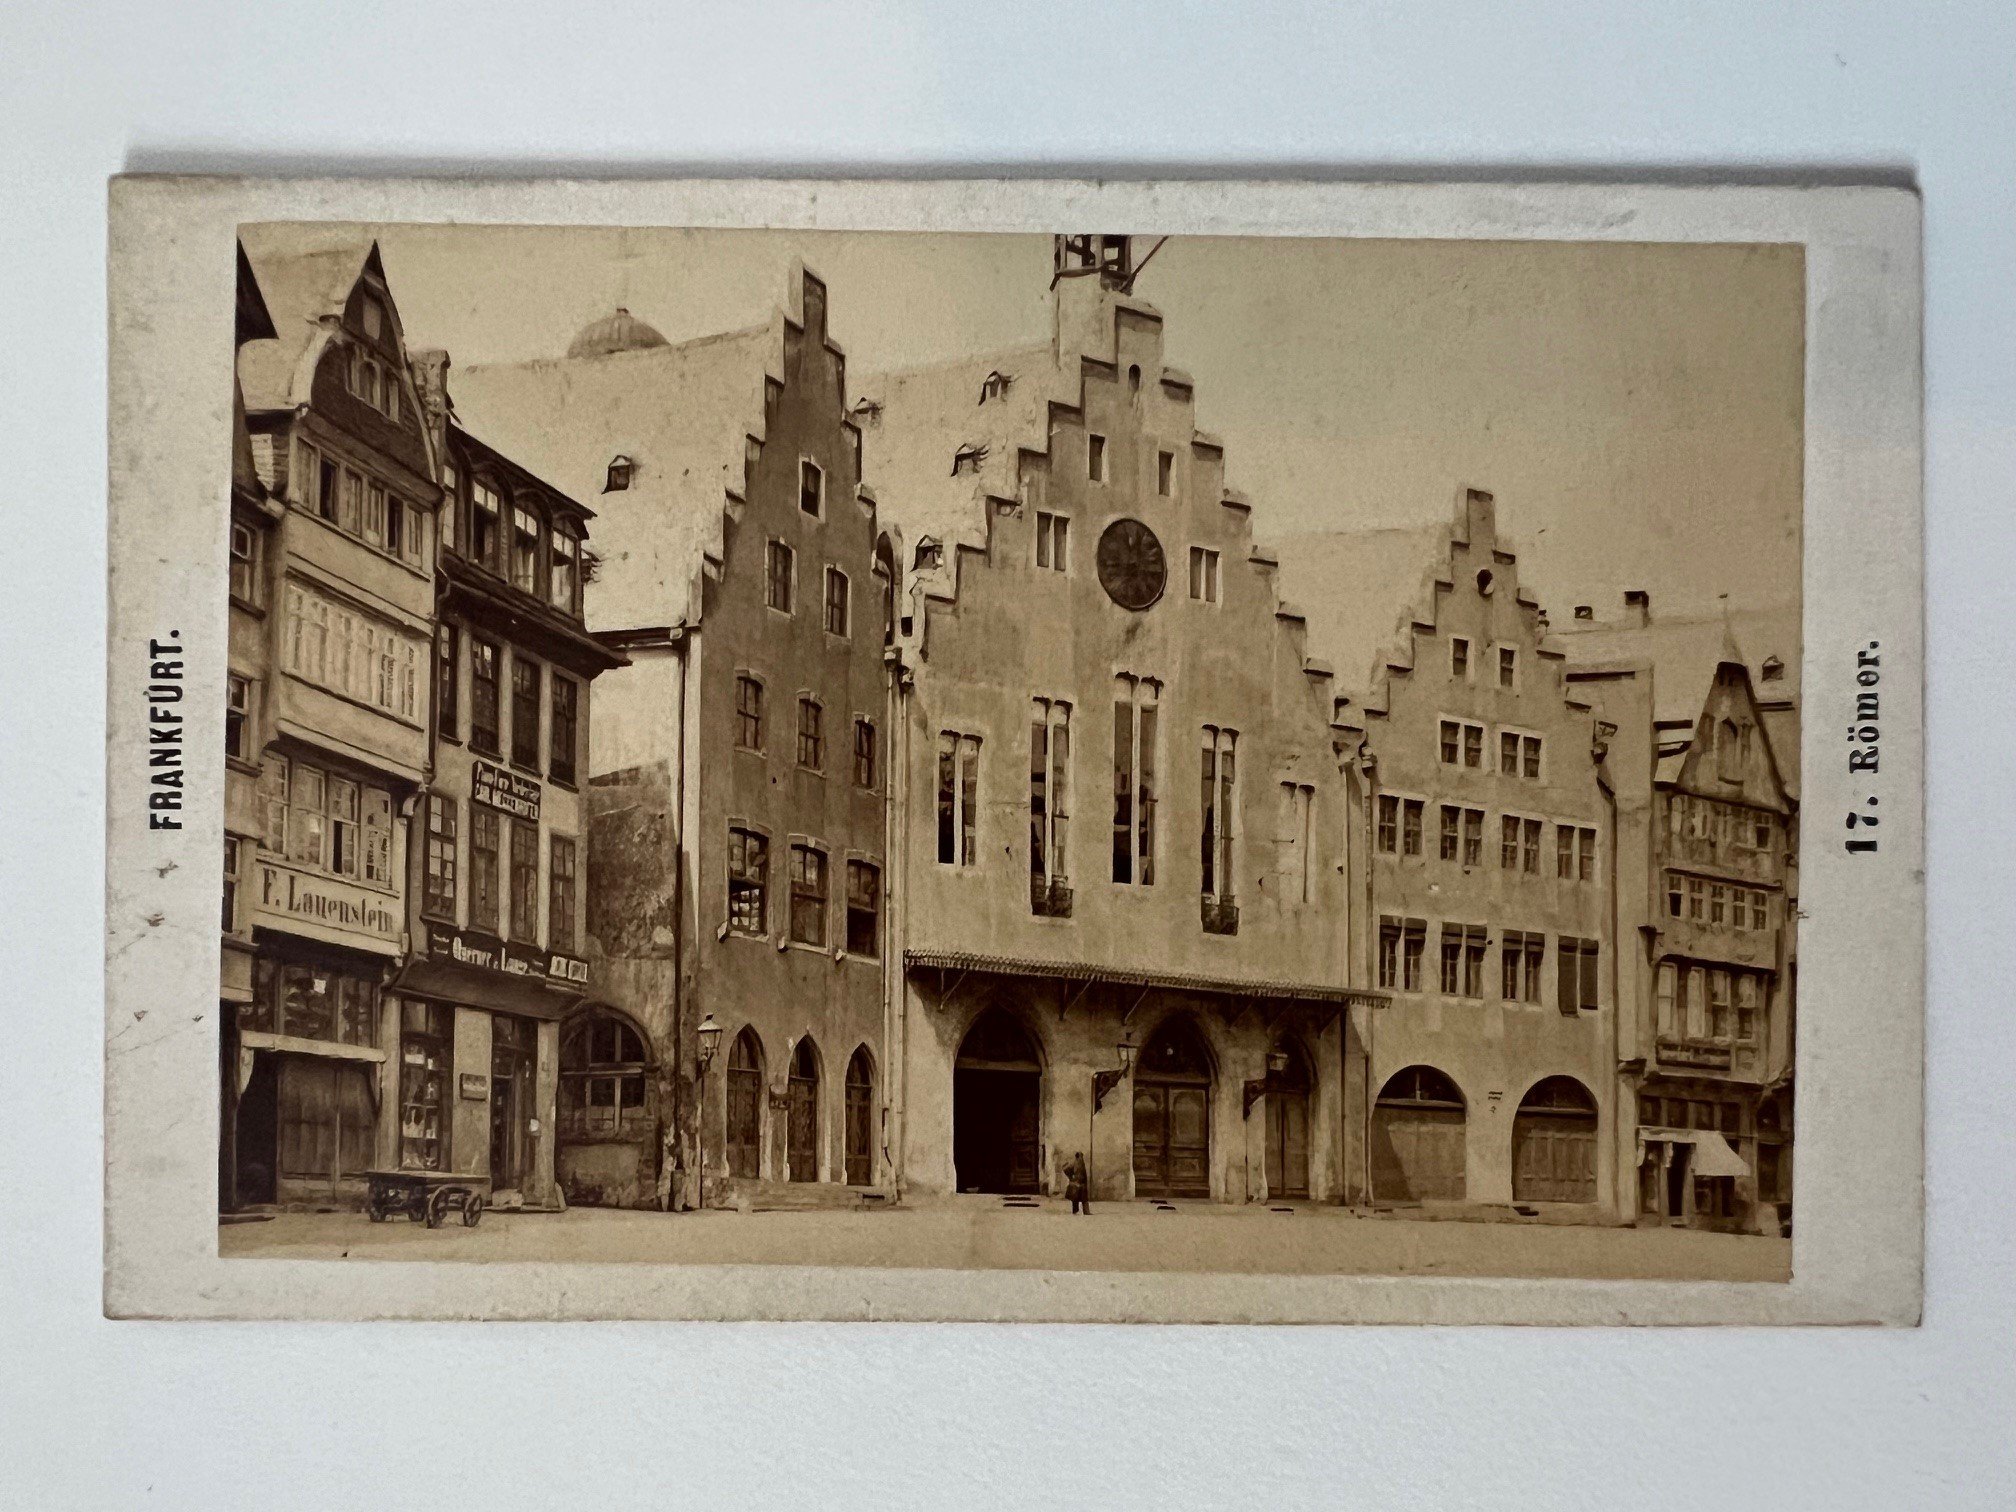 CdV, Frantisek Fridrich, Frankfurt, Nr. 17, Römer, ca. 1875. (Taunus-Rhein-Main - Regionalgeschichtliche Sammlung Dr. Stefan Naas CC BY-NC-SA)